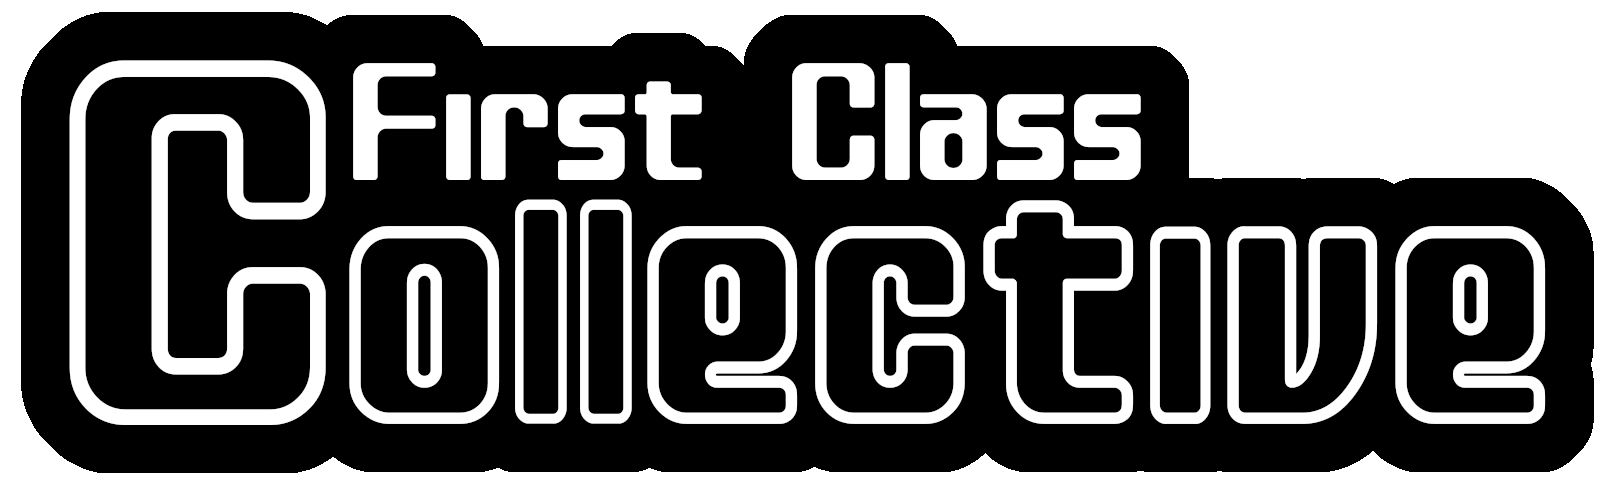 First Class Collective CD logo